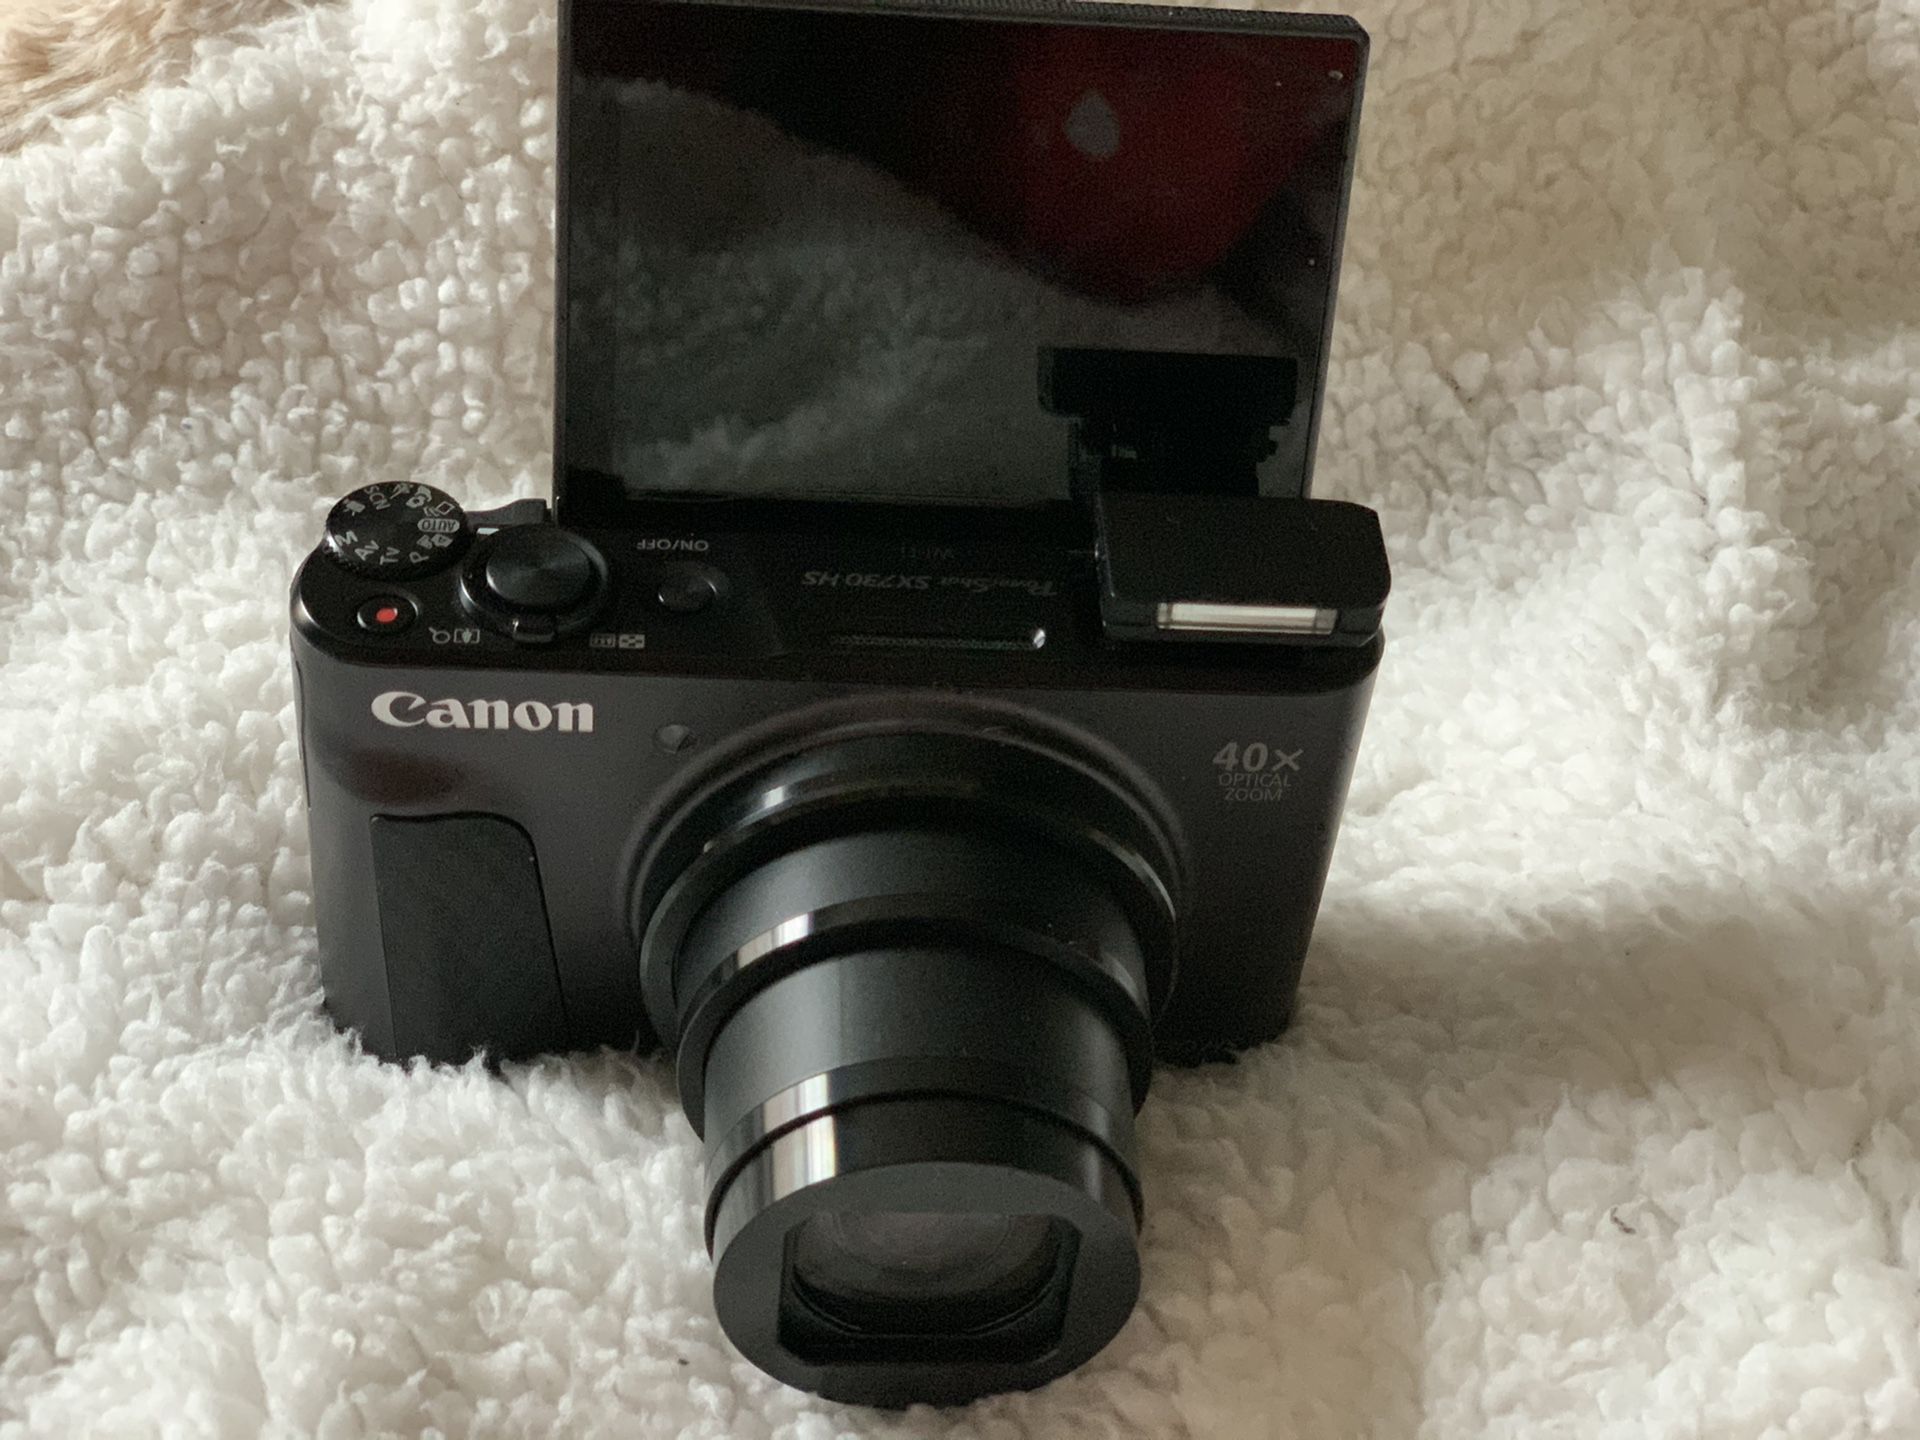 Canon powershot SX730